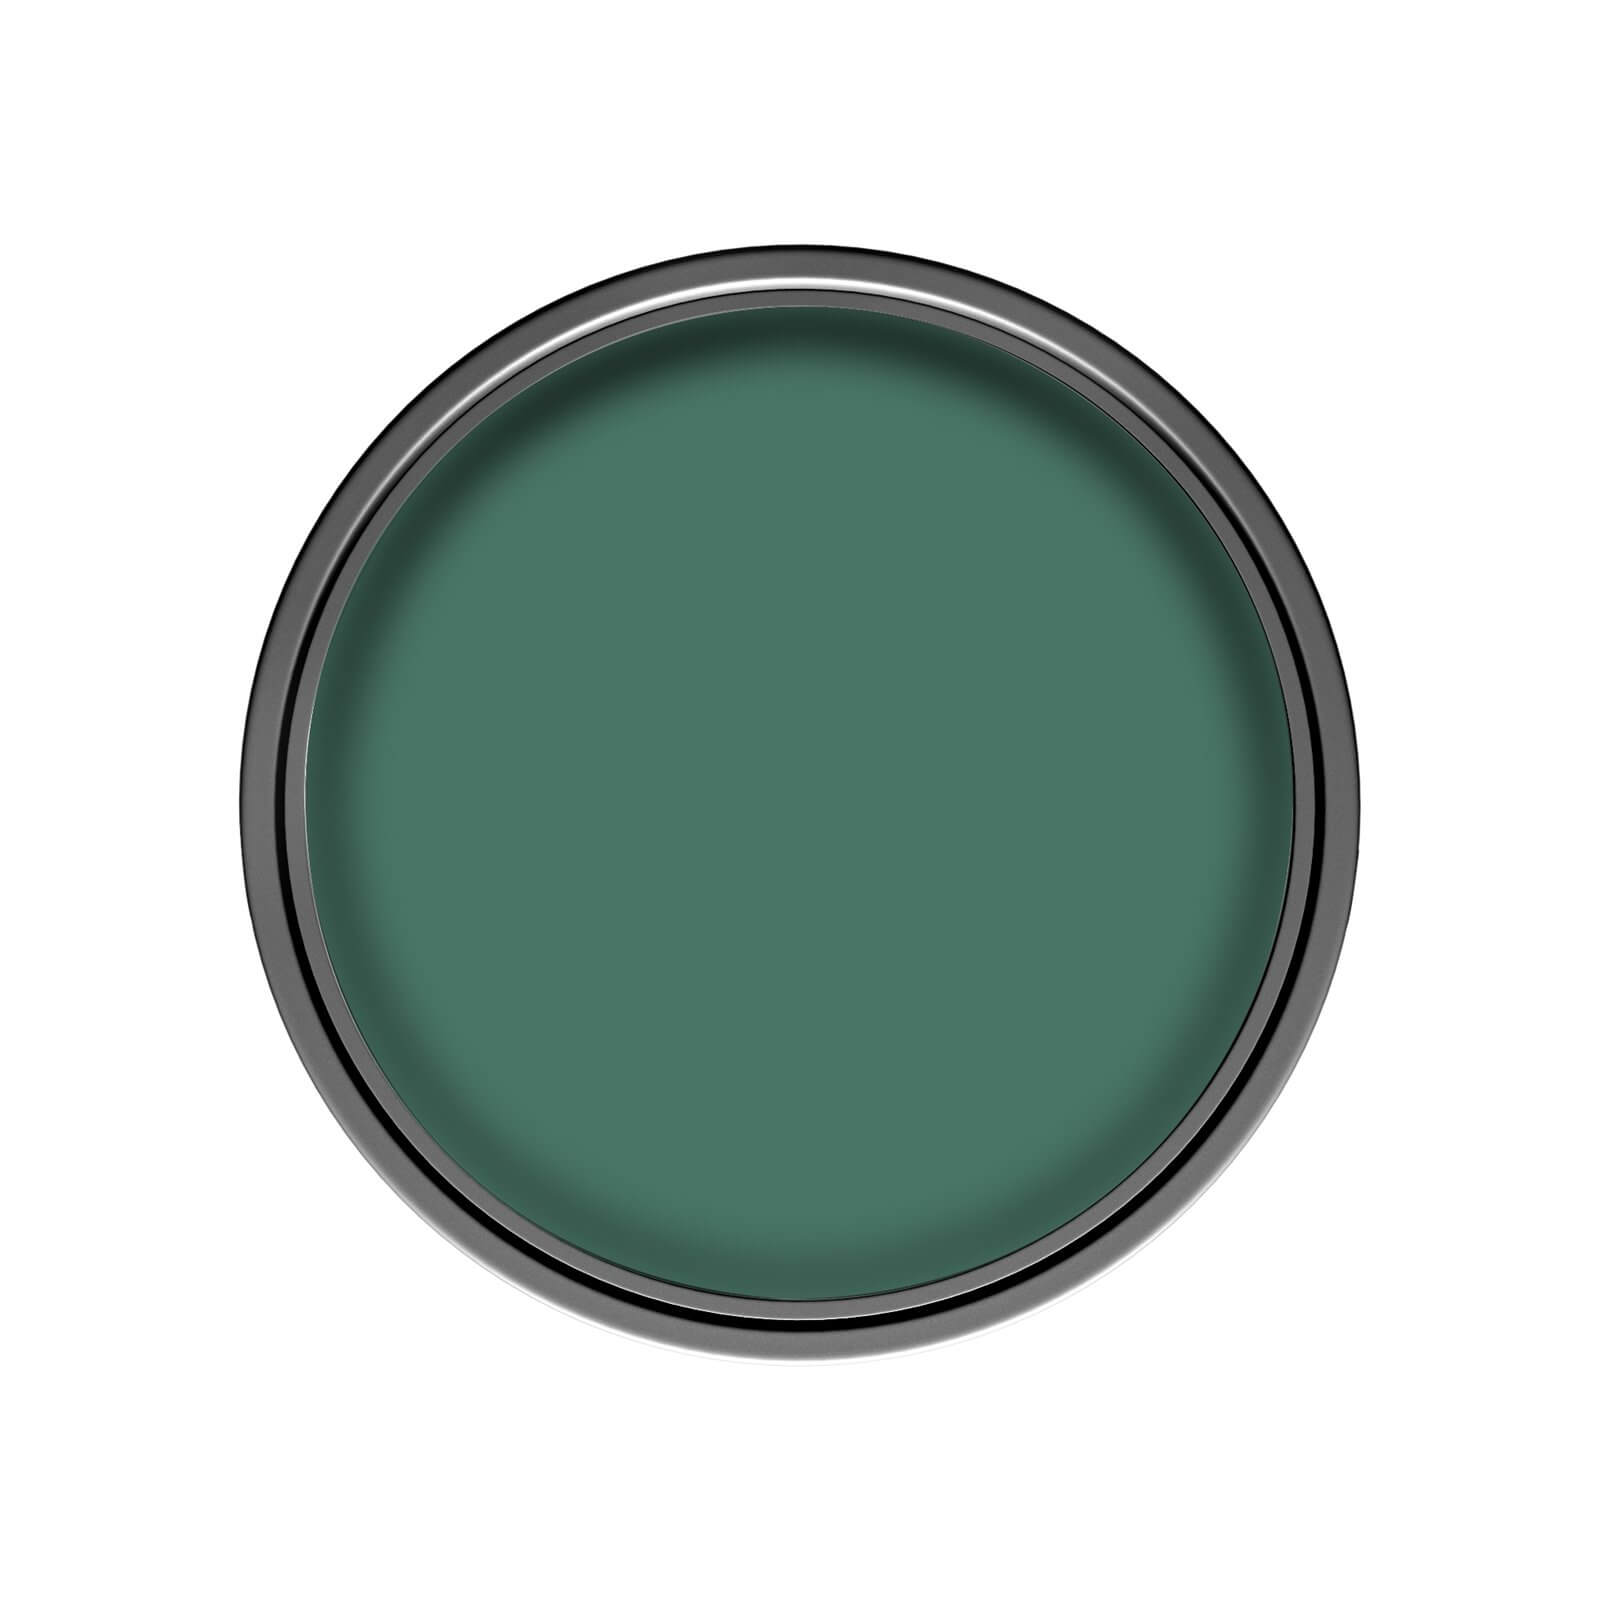 Dulux Matt Emulsion Paint Emerald Glade - 2.5L